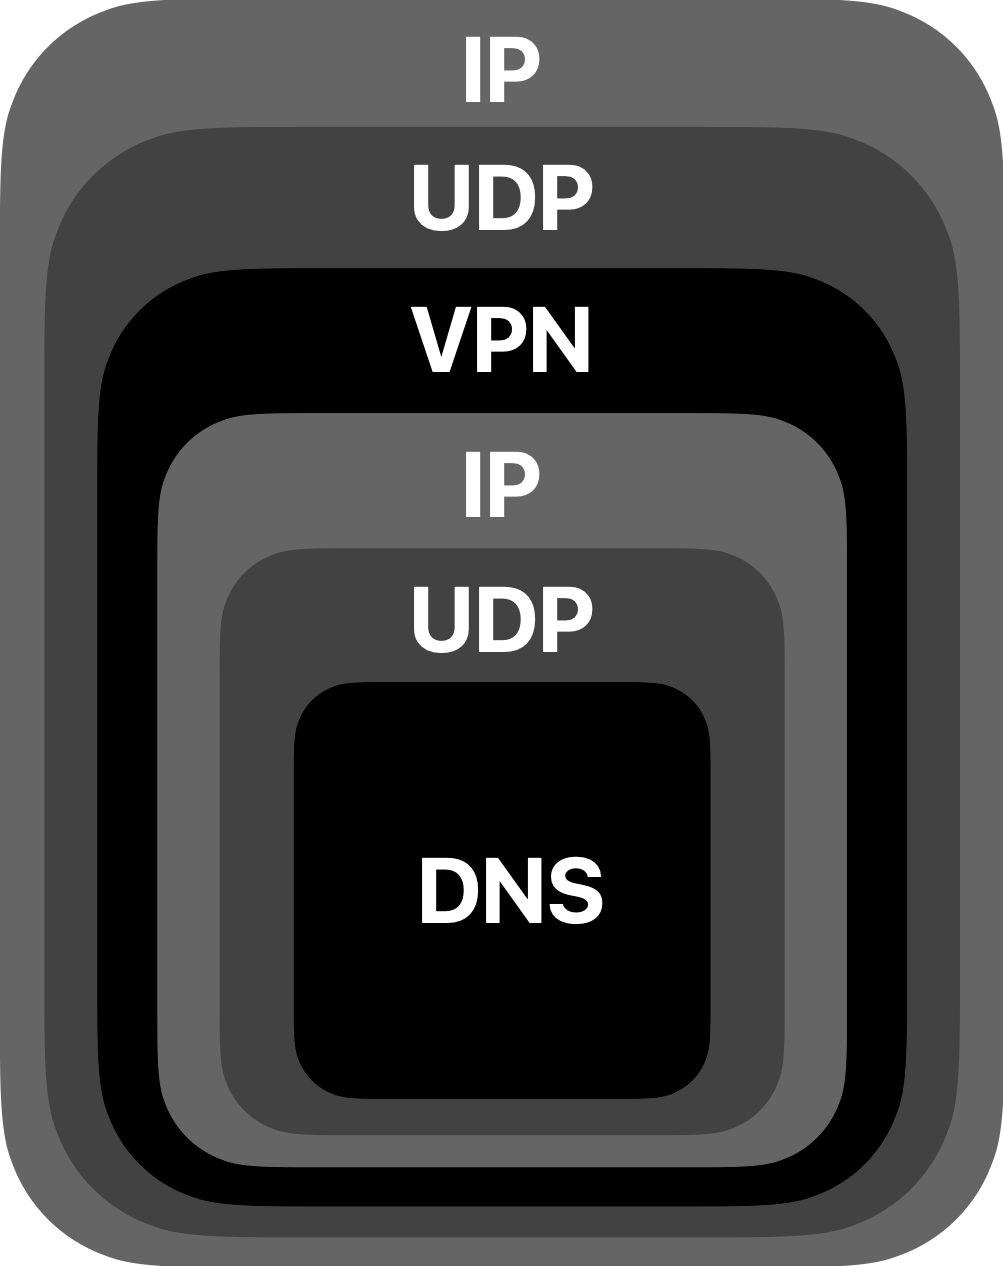 VPN, nesting protocols